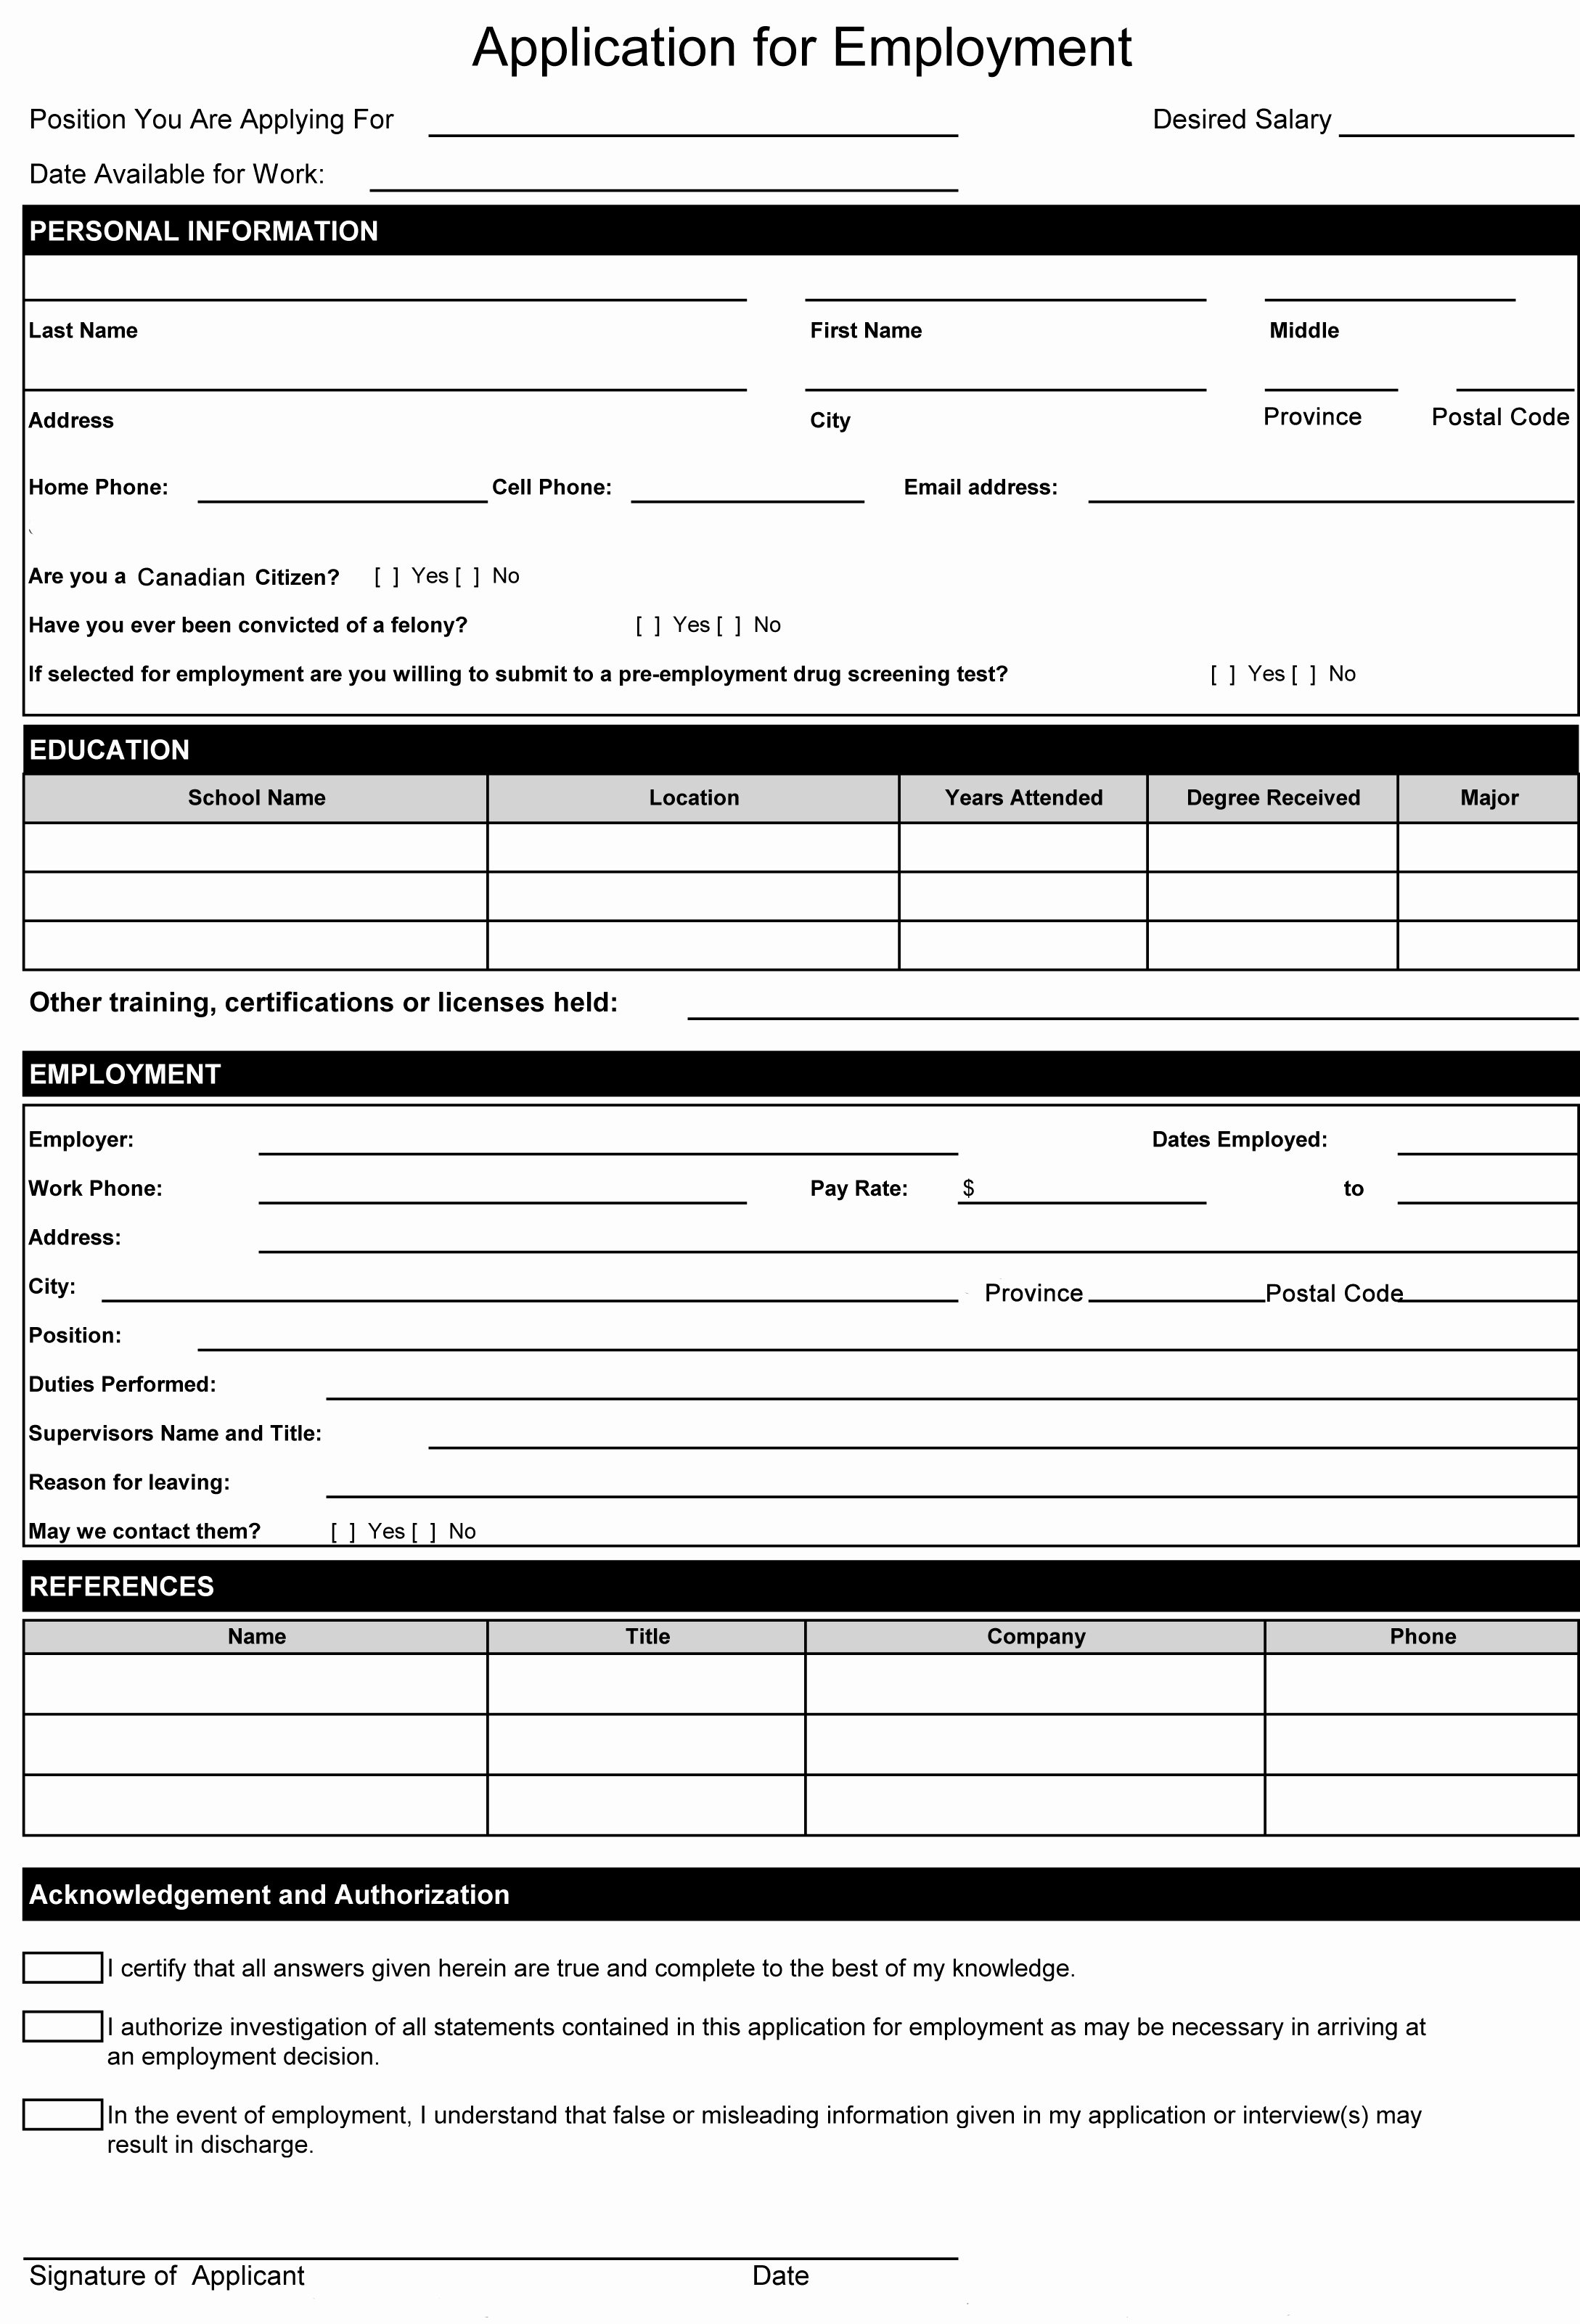 Sample Employment Application form